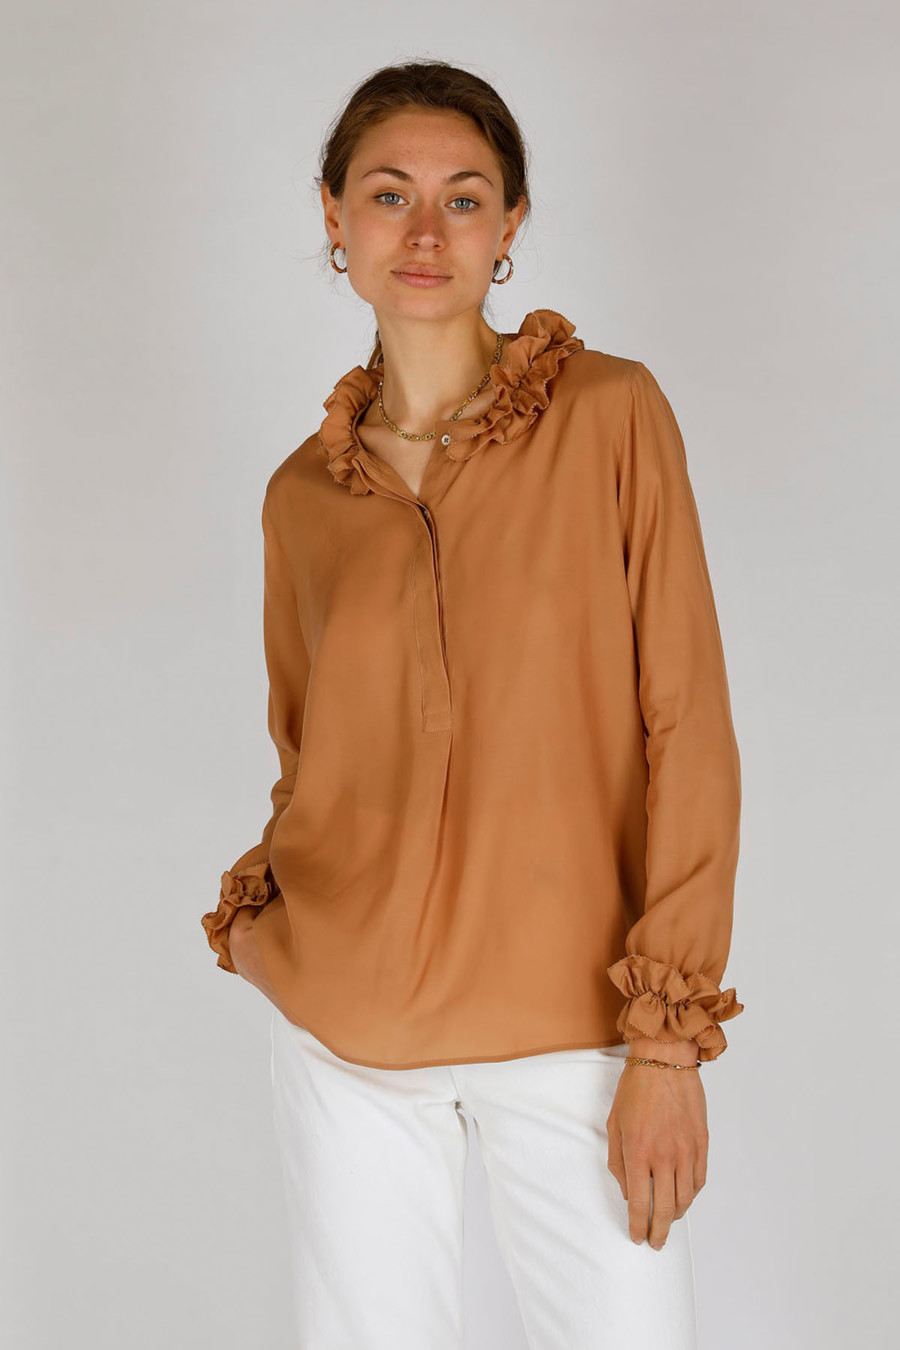 MORI - Collarless blouse with ruffles - Colour: Caramel